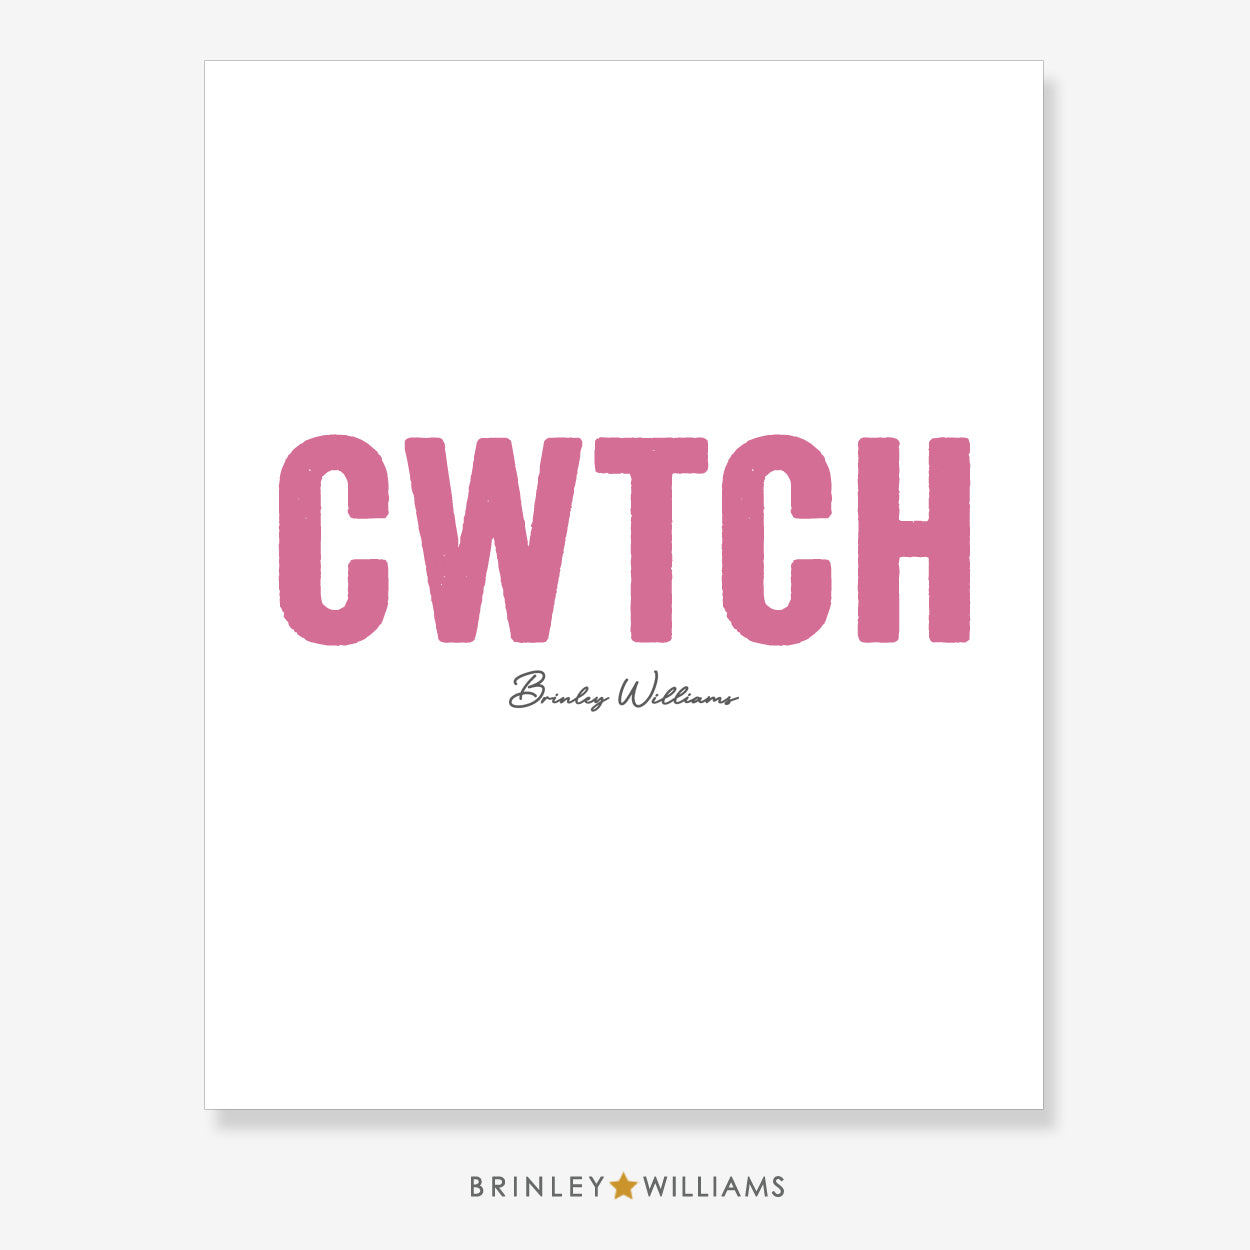 Big Cwtch Wall Art Poster - Pink